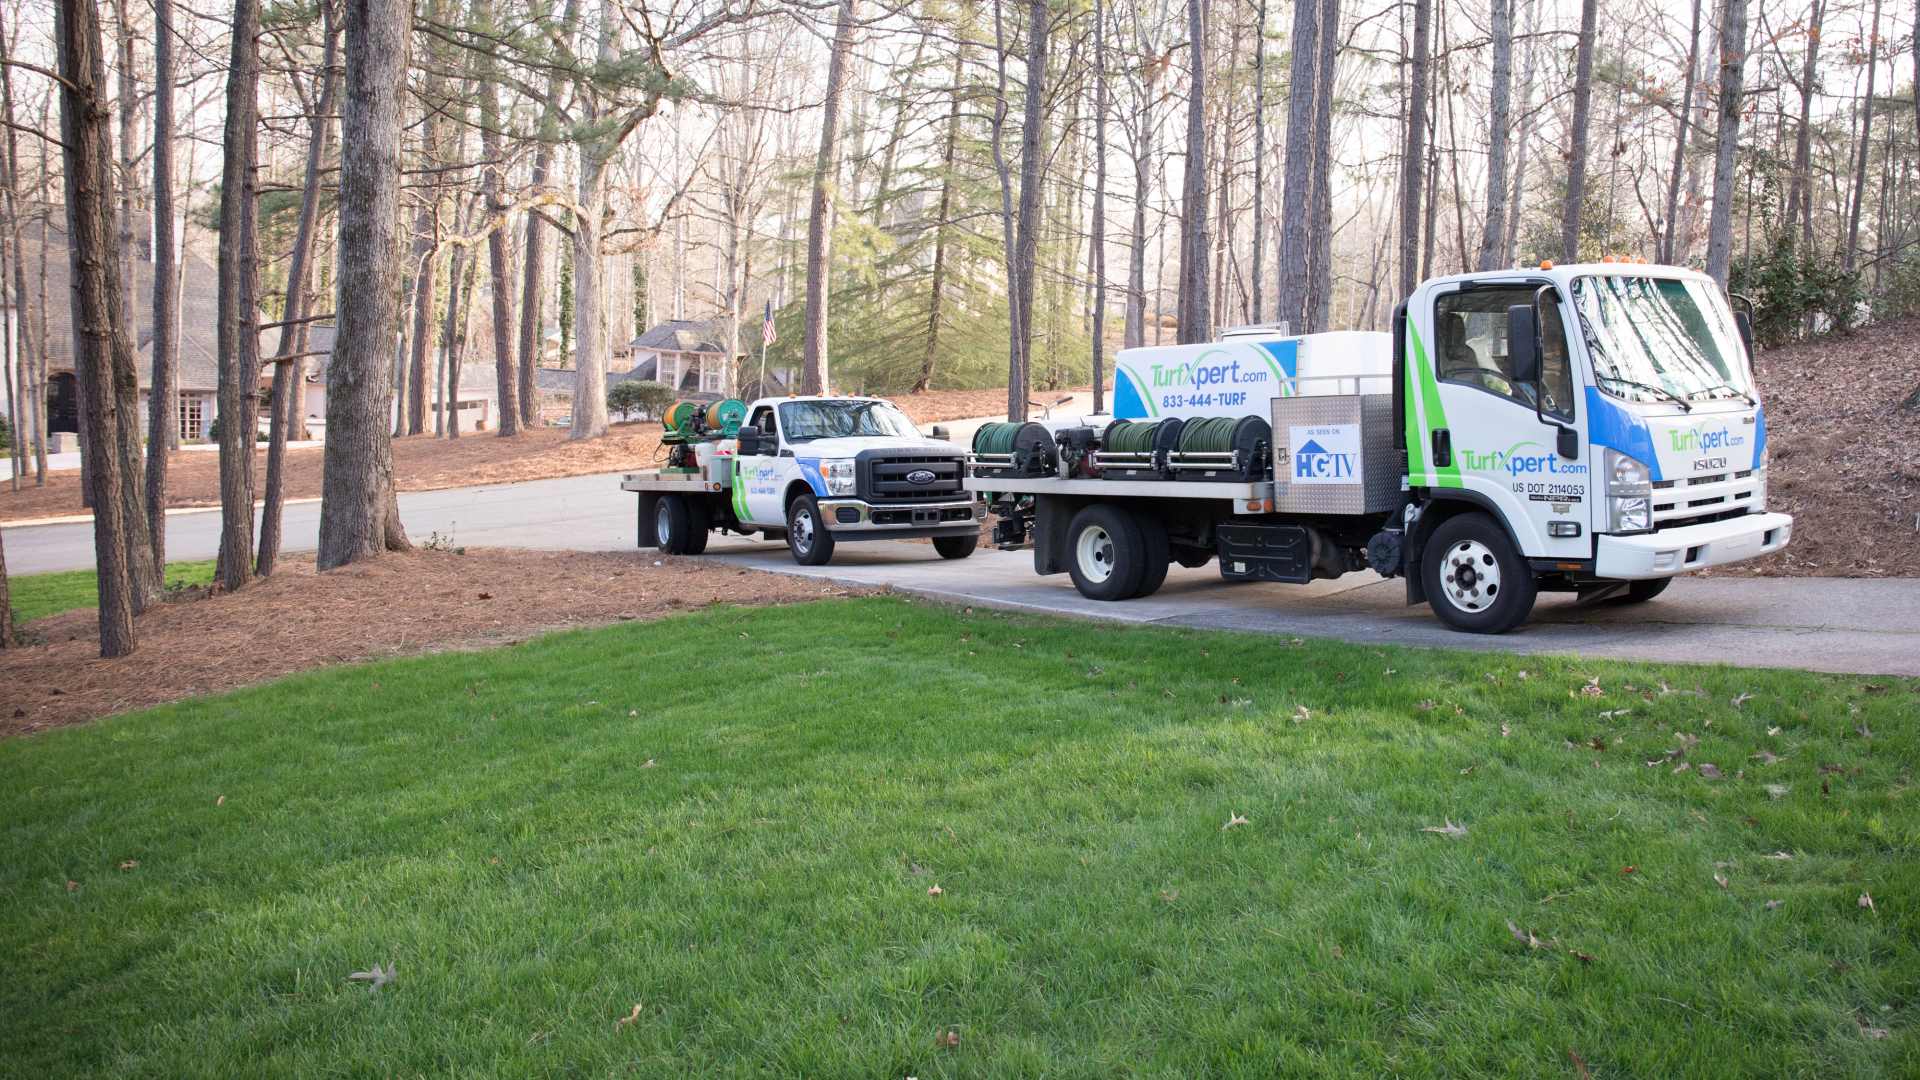 TurfXpert work trucks displayed in driveway in Sugar Hill, GA.